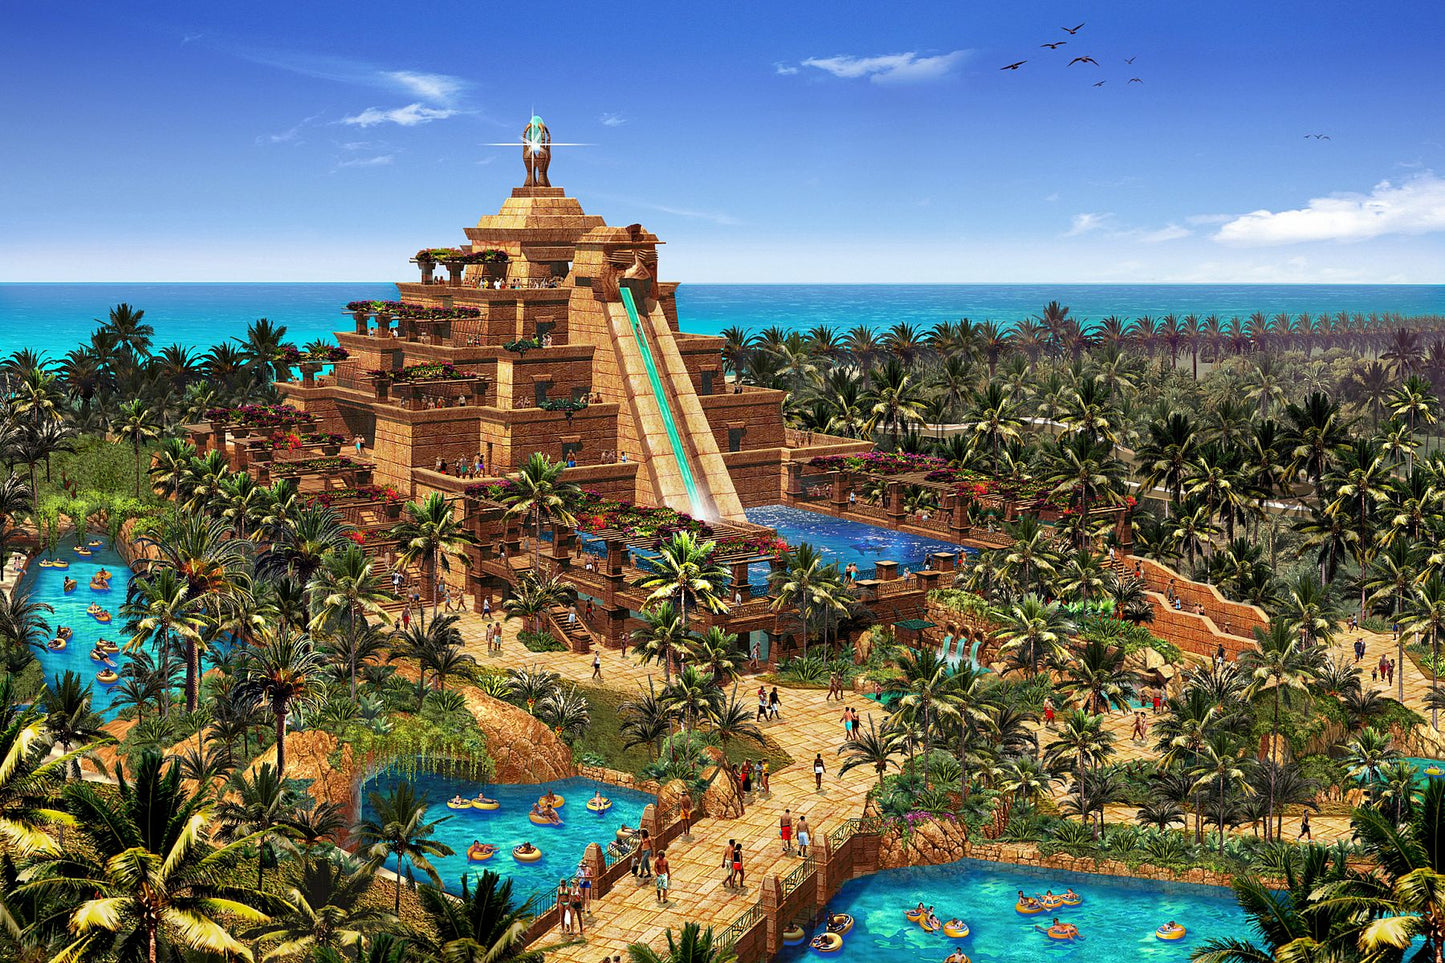 Dubai Atlantis Aquaventure Waterpark Ticket - Tripventura